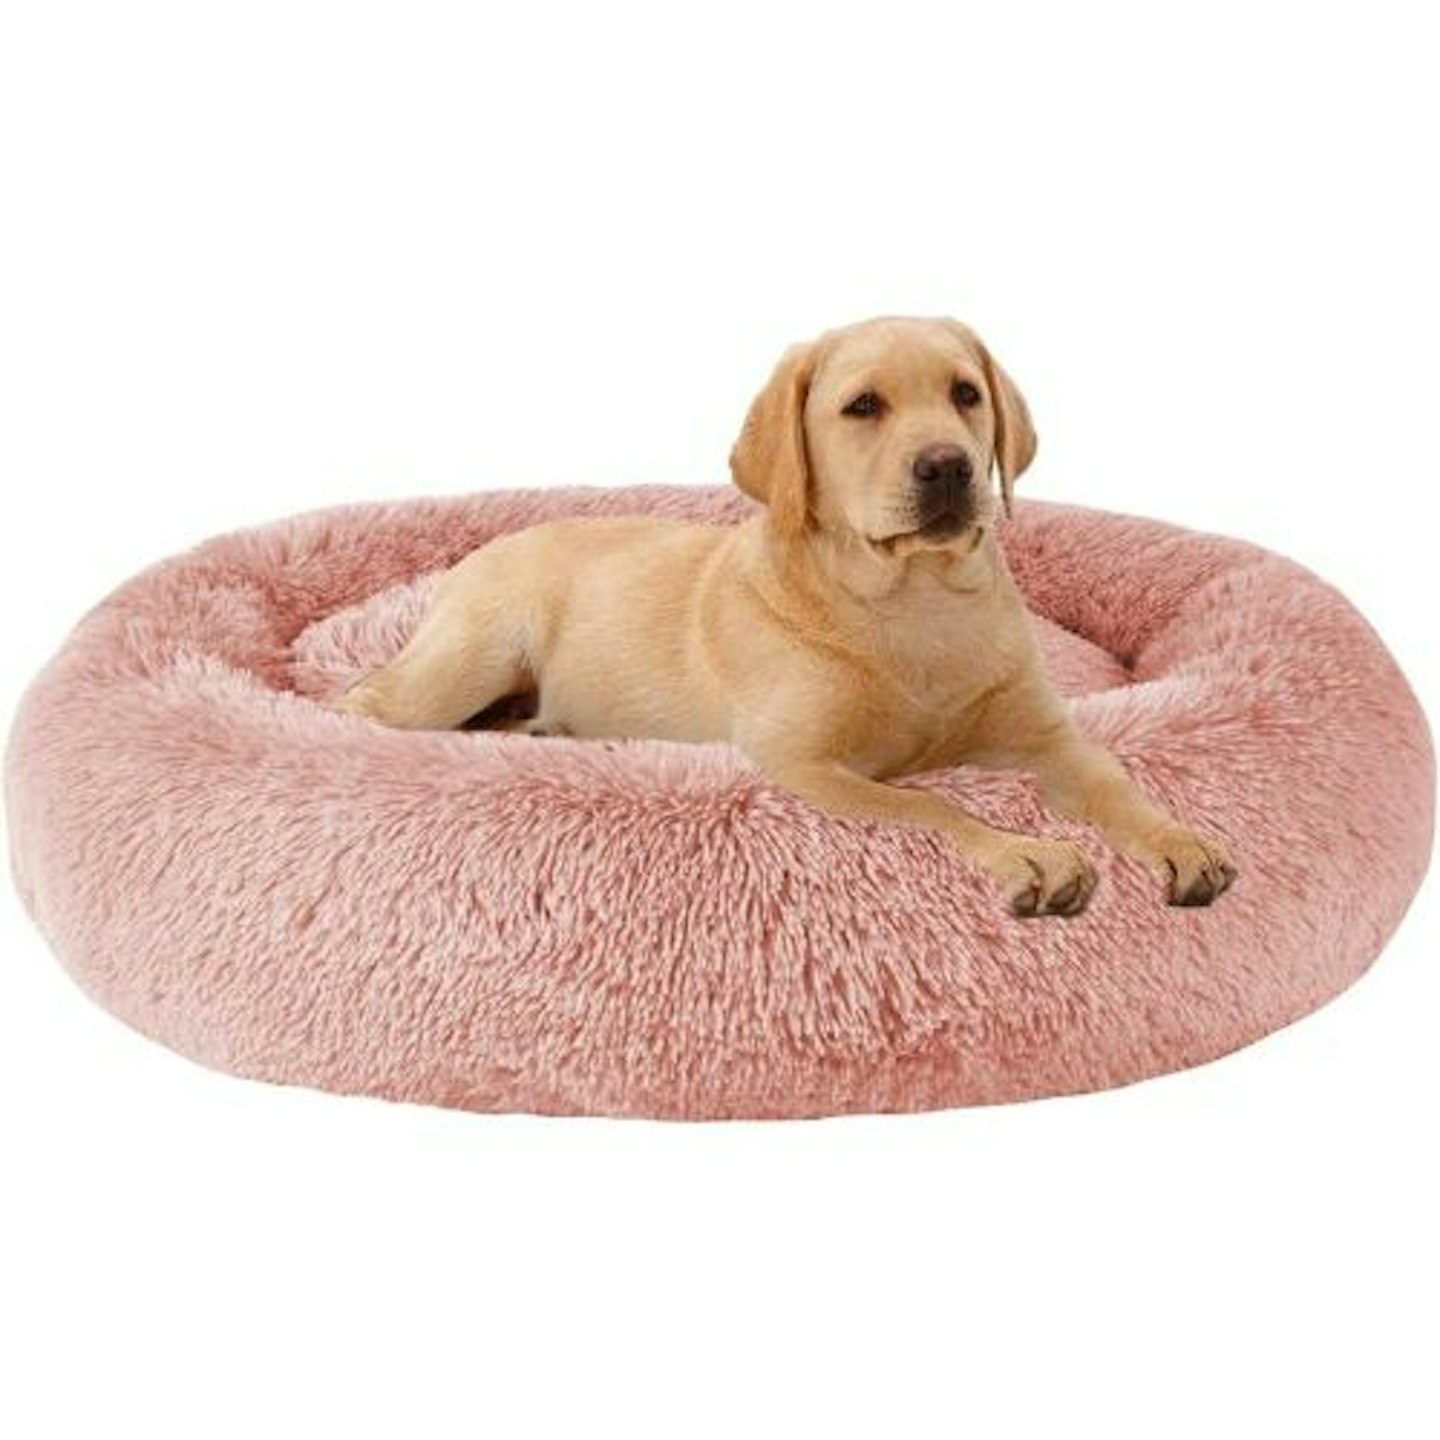 Mirkoo Round Dog Bed